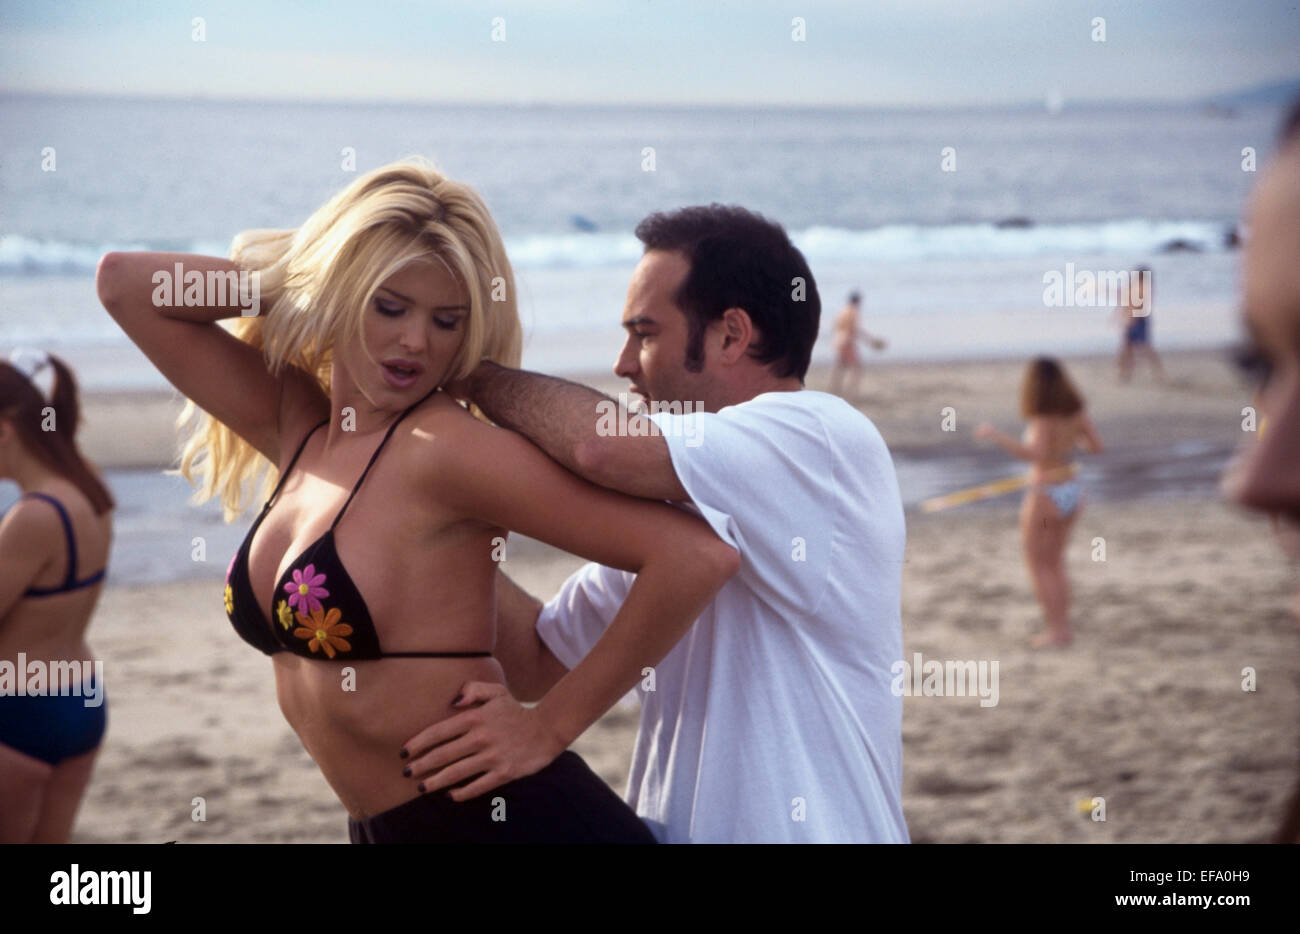 Bikini Beach Movie High Resolution Stock Photography and Images - Alamy